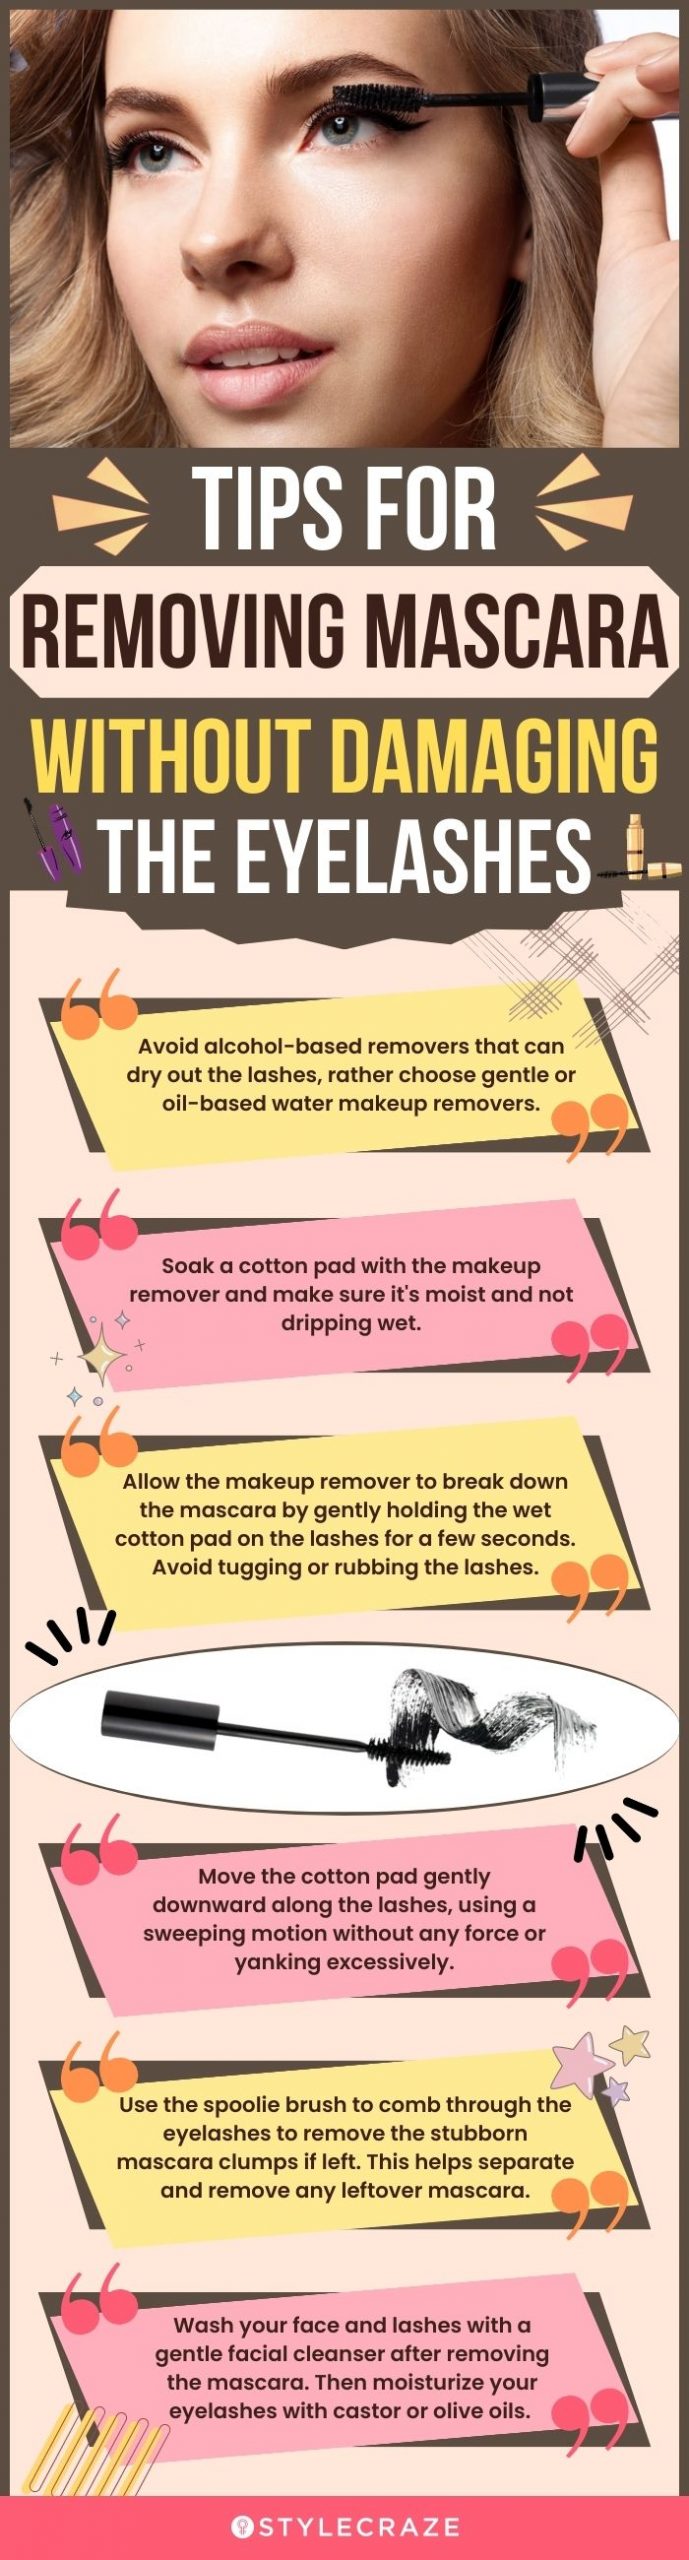 Tips For Removing Mascara Without Damaging The Eyelashes (infographic)